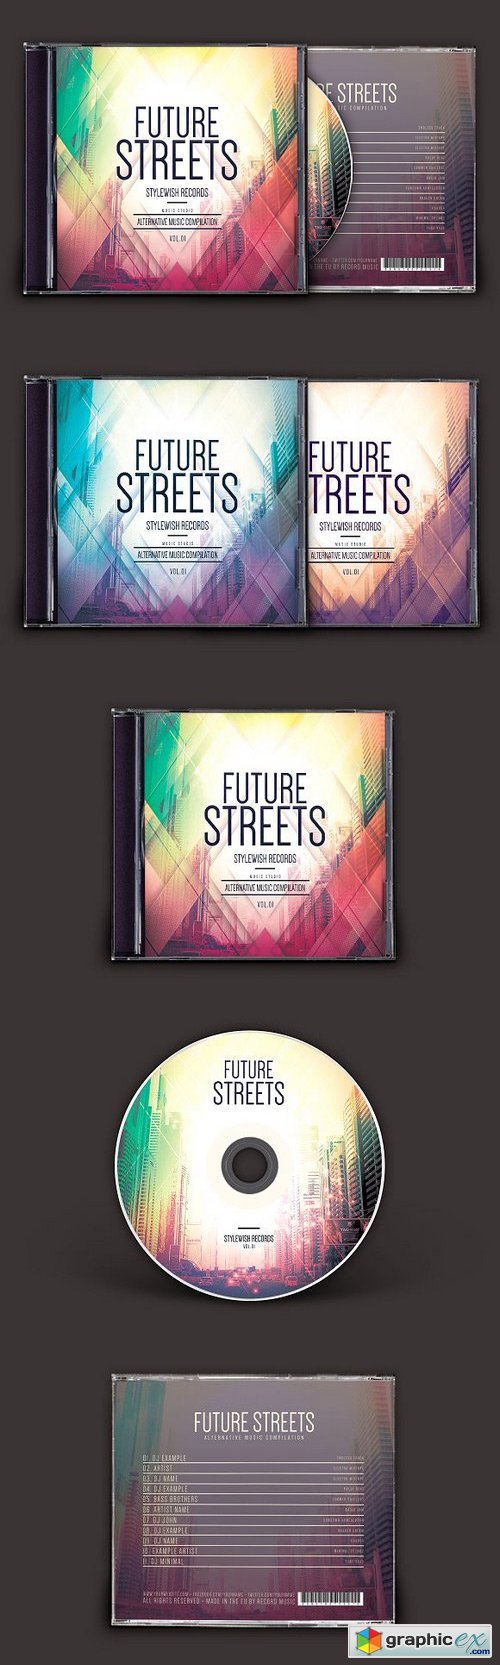 Future Streets CD Cover Artwork